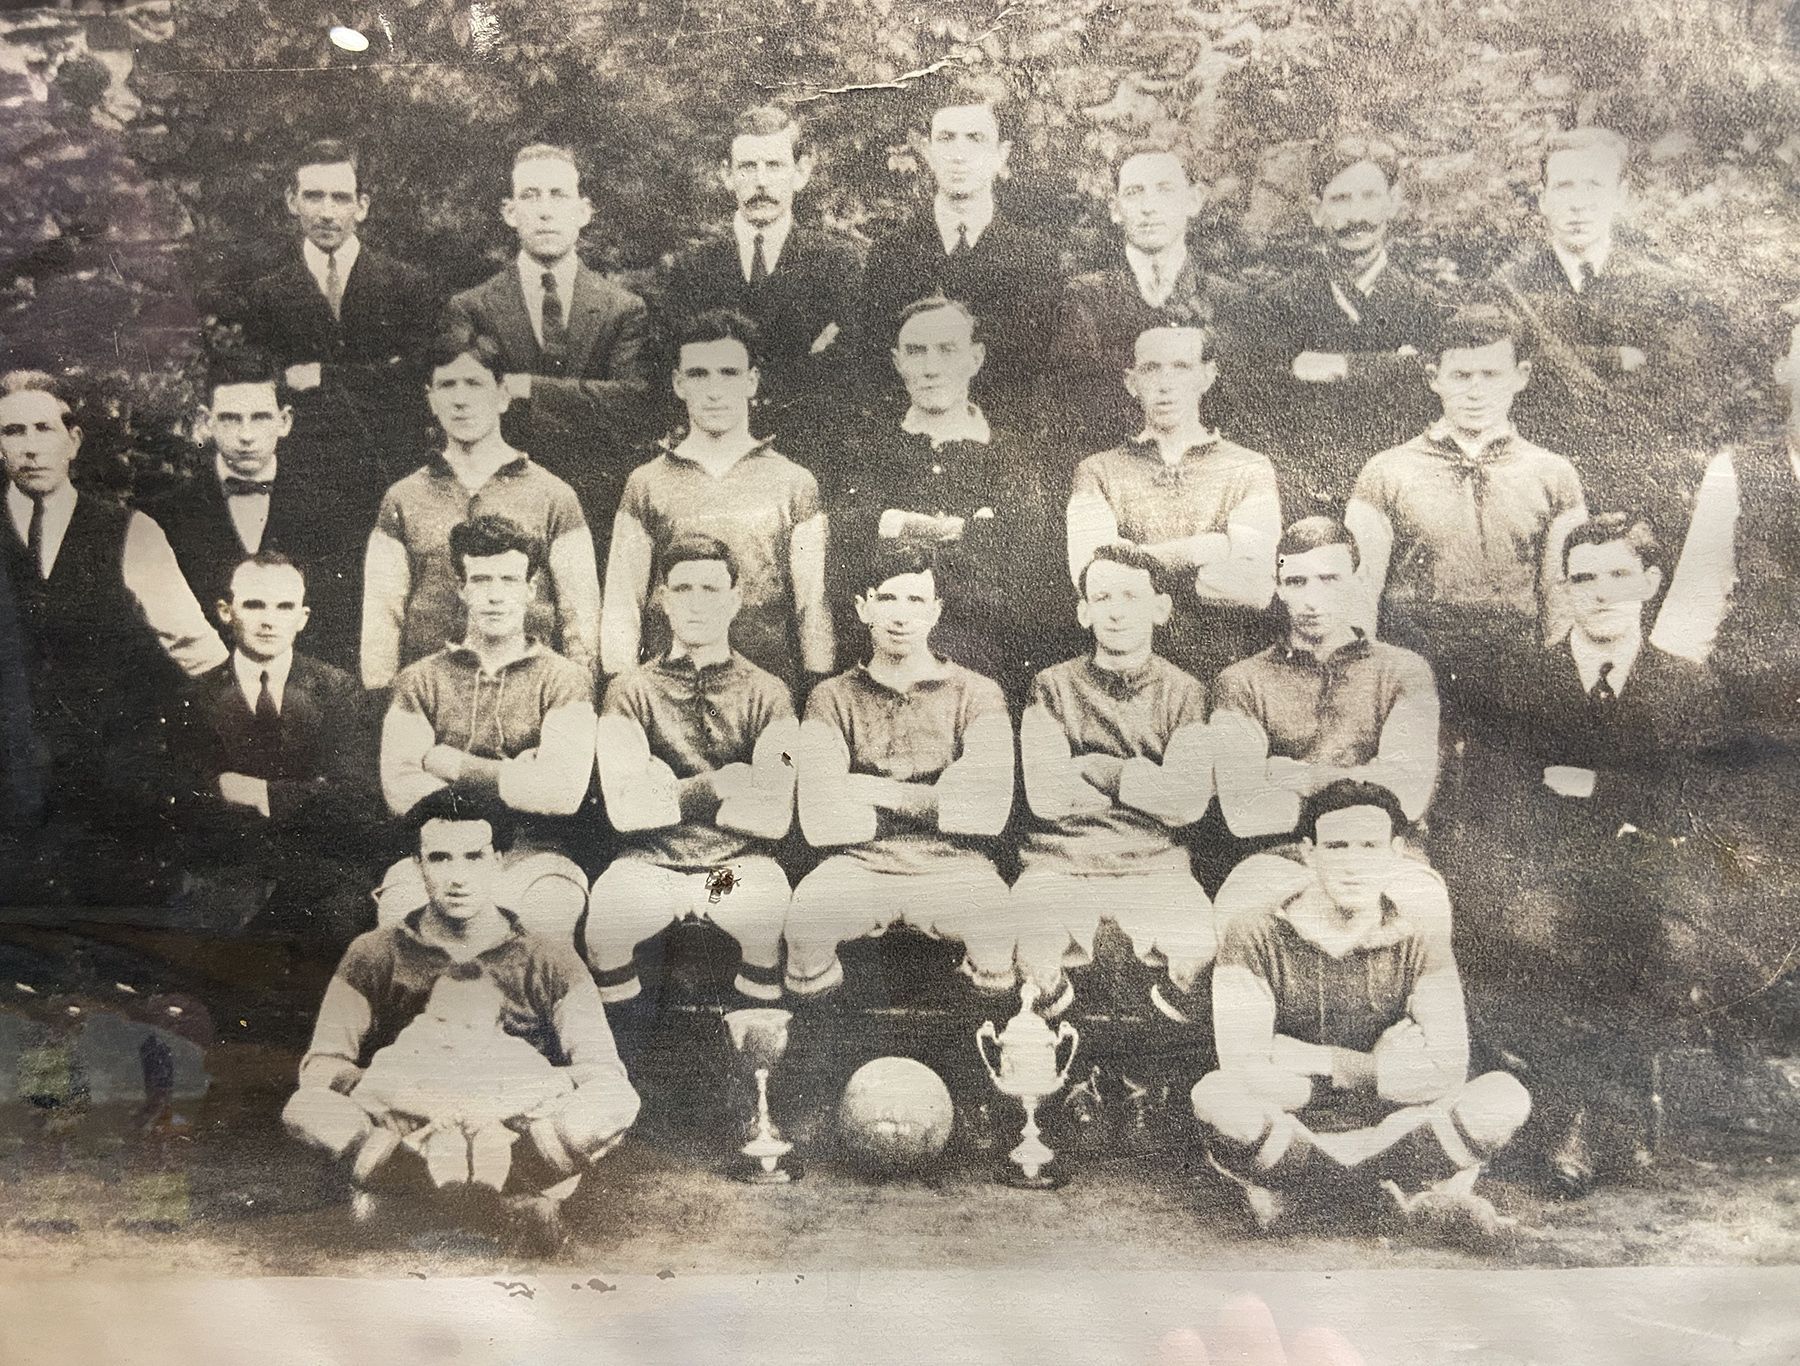 HISTORIC: Alton United, winners of the FAI Cup in 1923